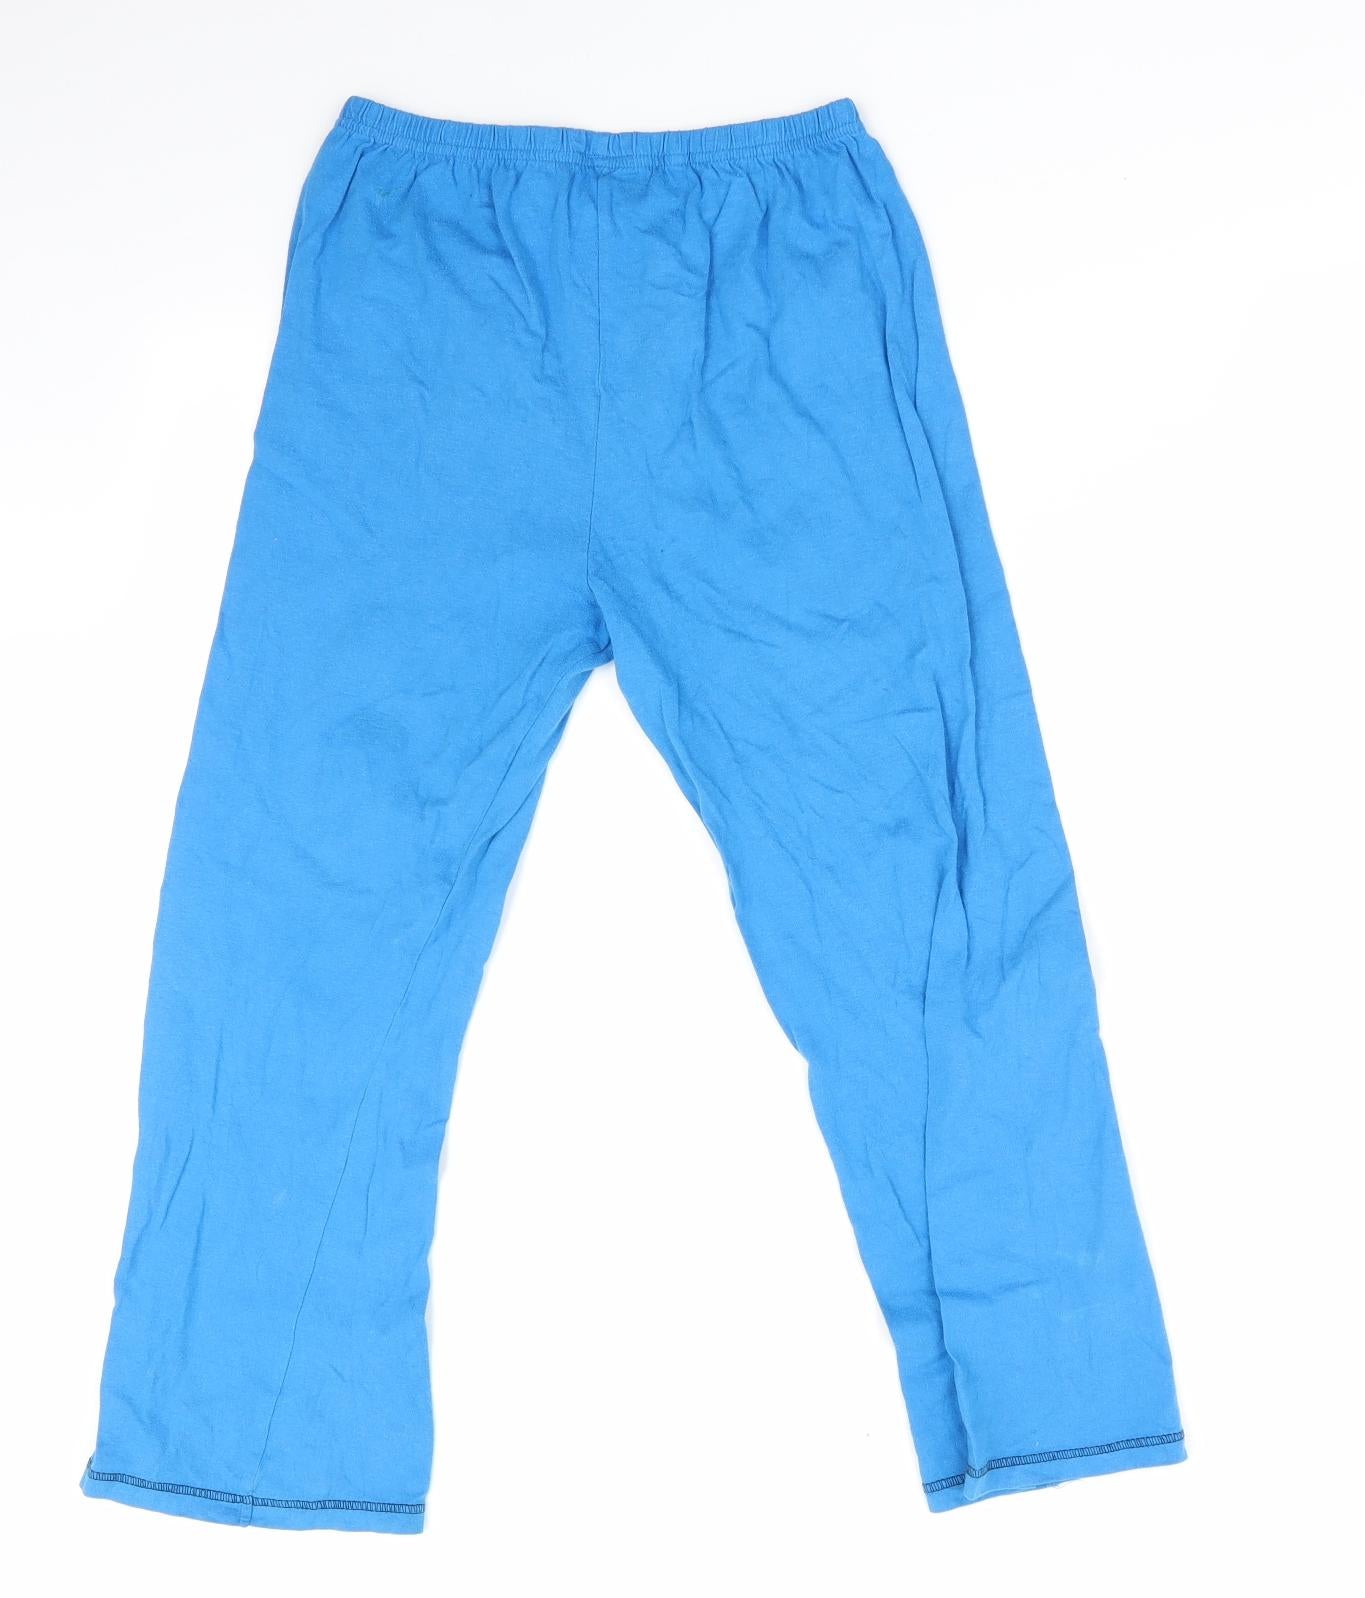 Preworn Boys Blue Solid   Pyjama Pants Size 9-10 Years  - Spiderman